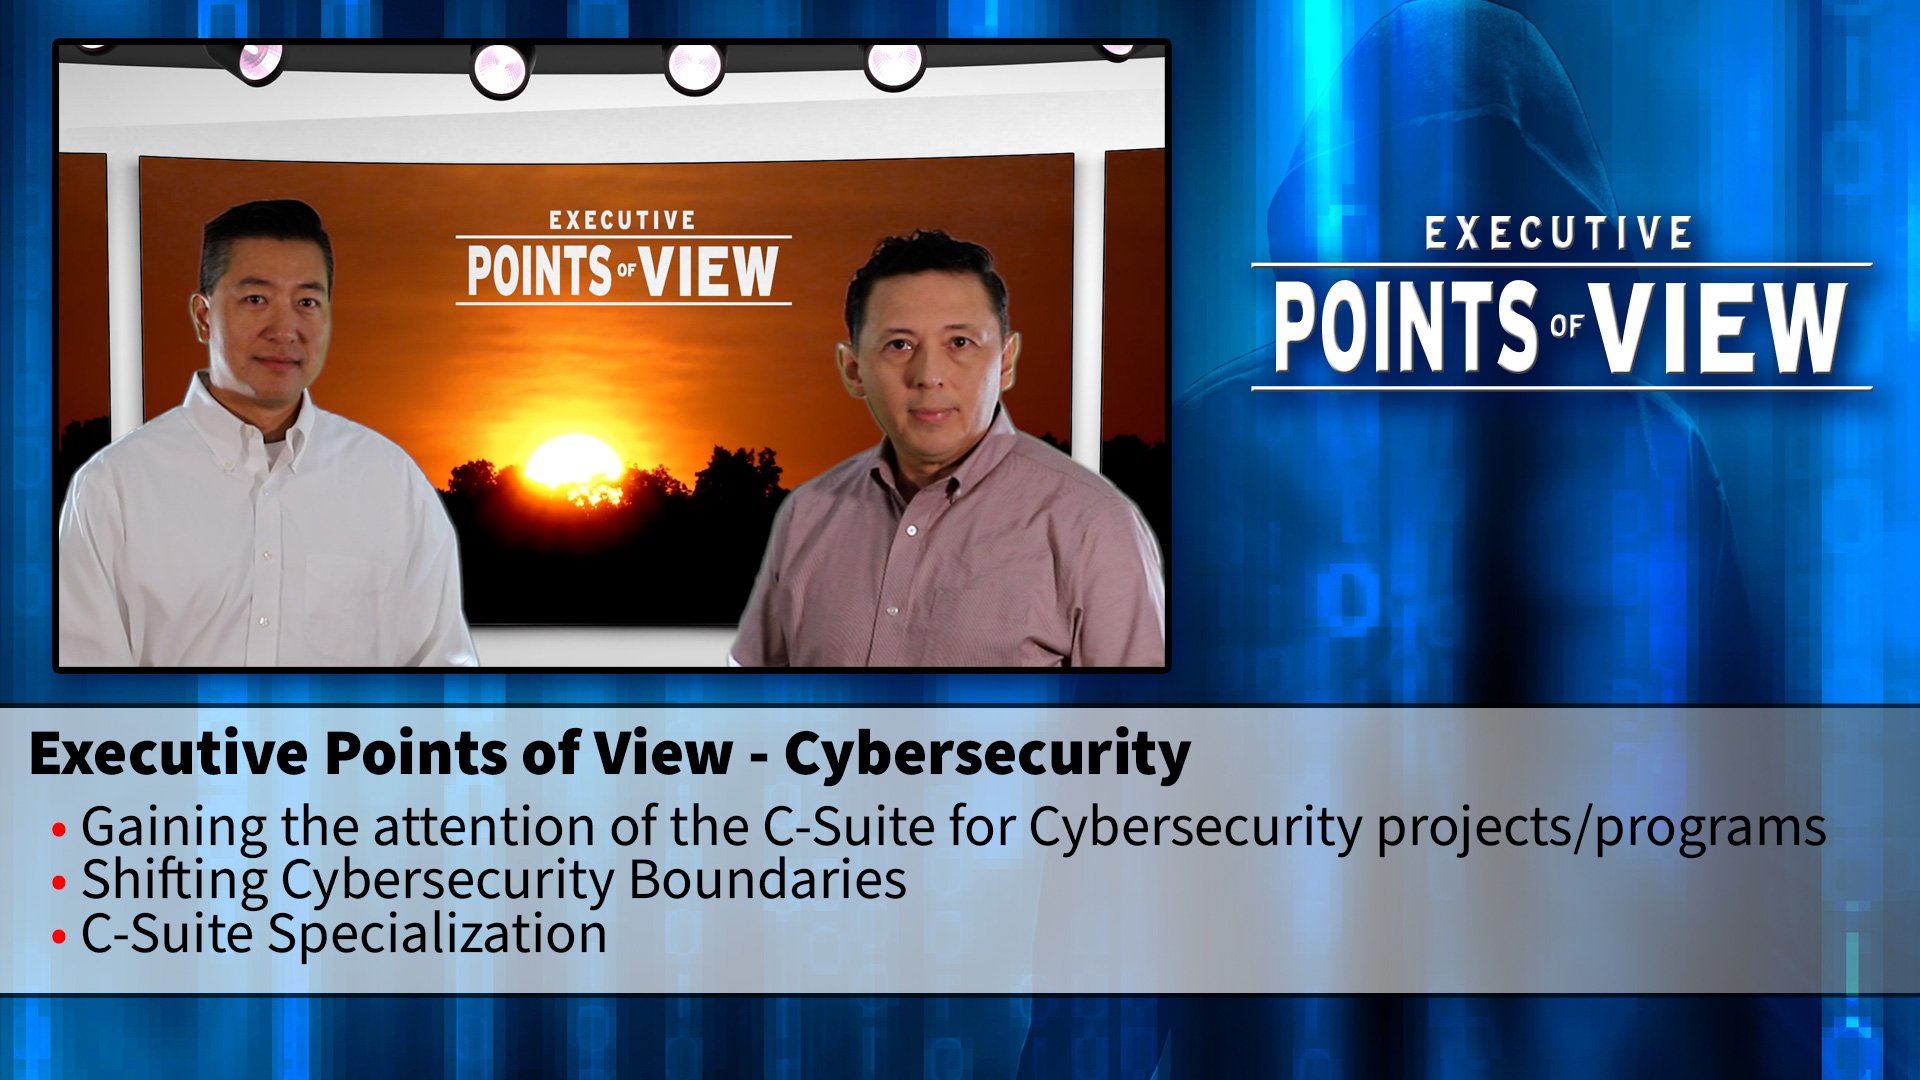 Grant & Joe discuss cybersecurity trends